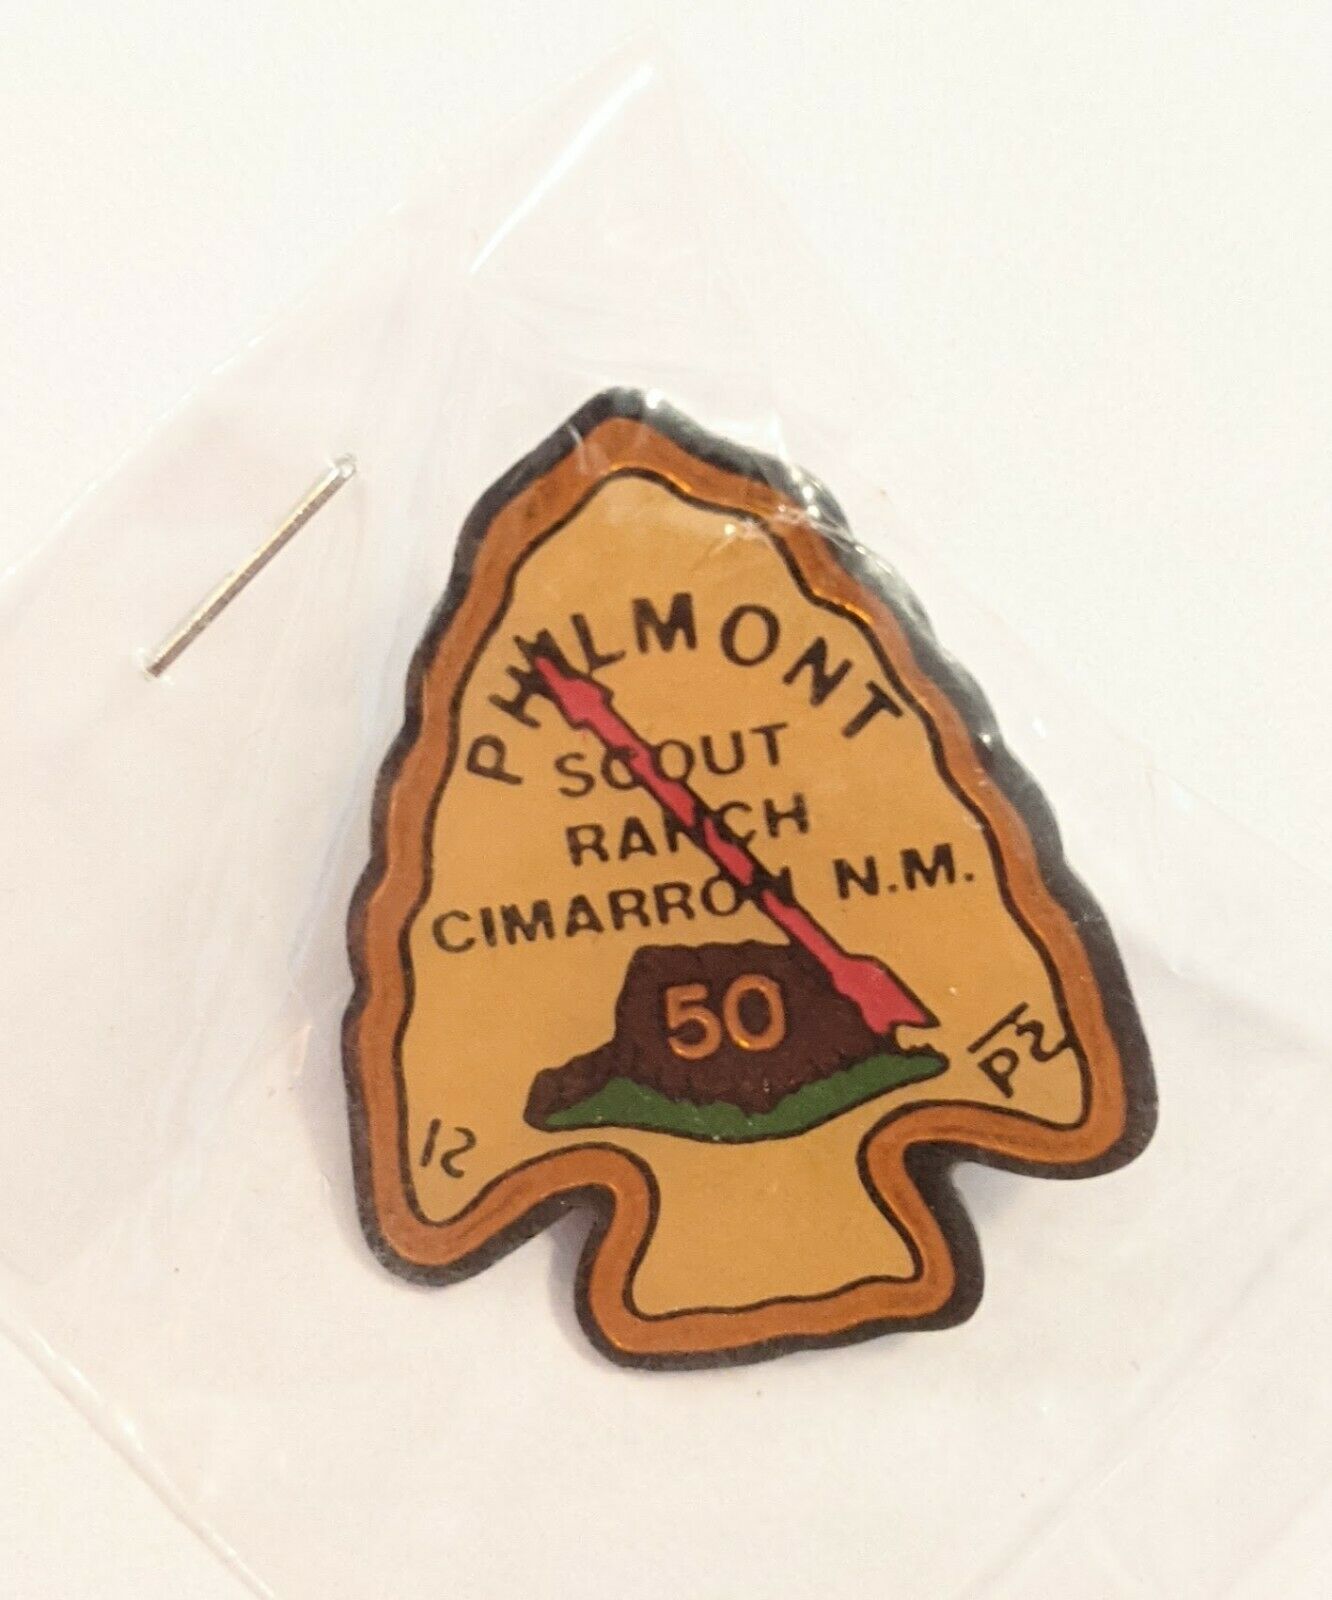 Boy Scout Philmont Scout Ranch 50th Anniv Pin - Carl Marchetti Collection